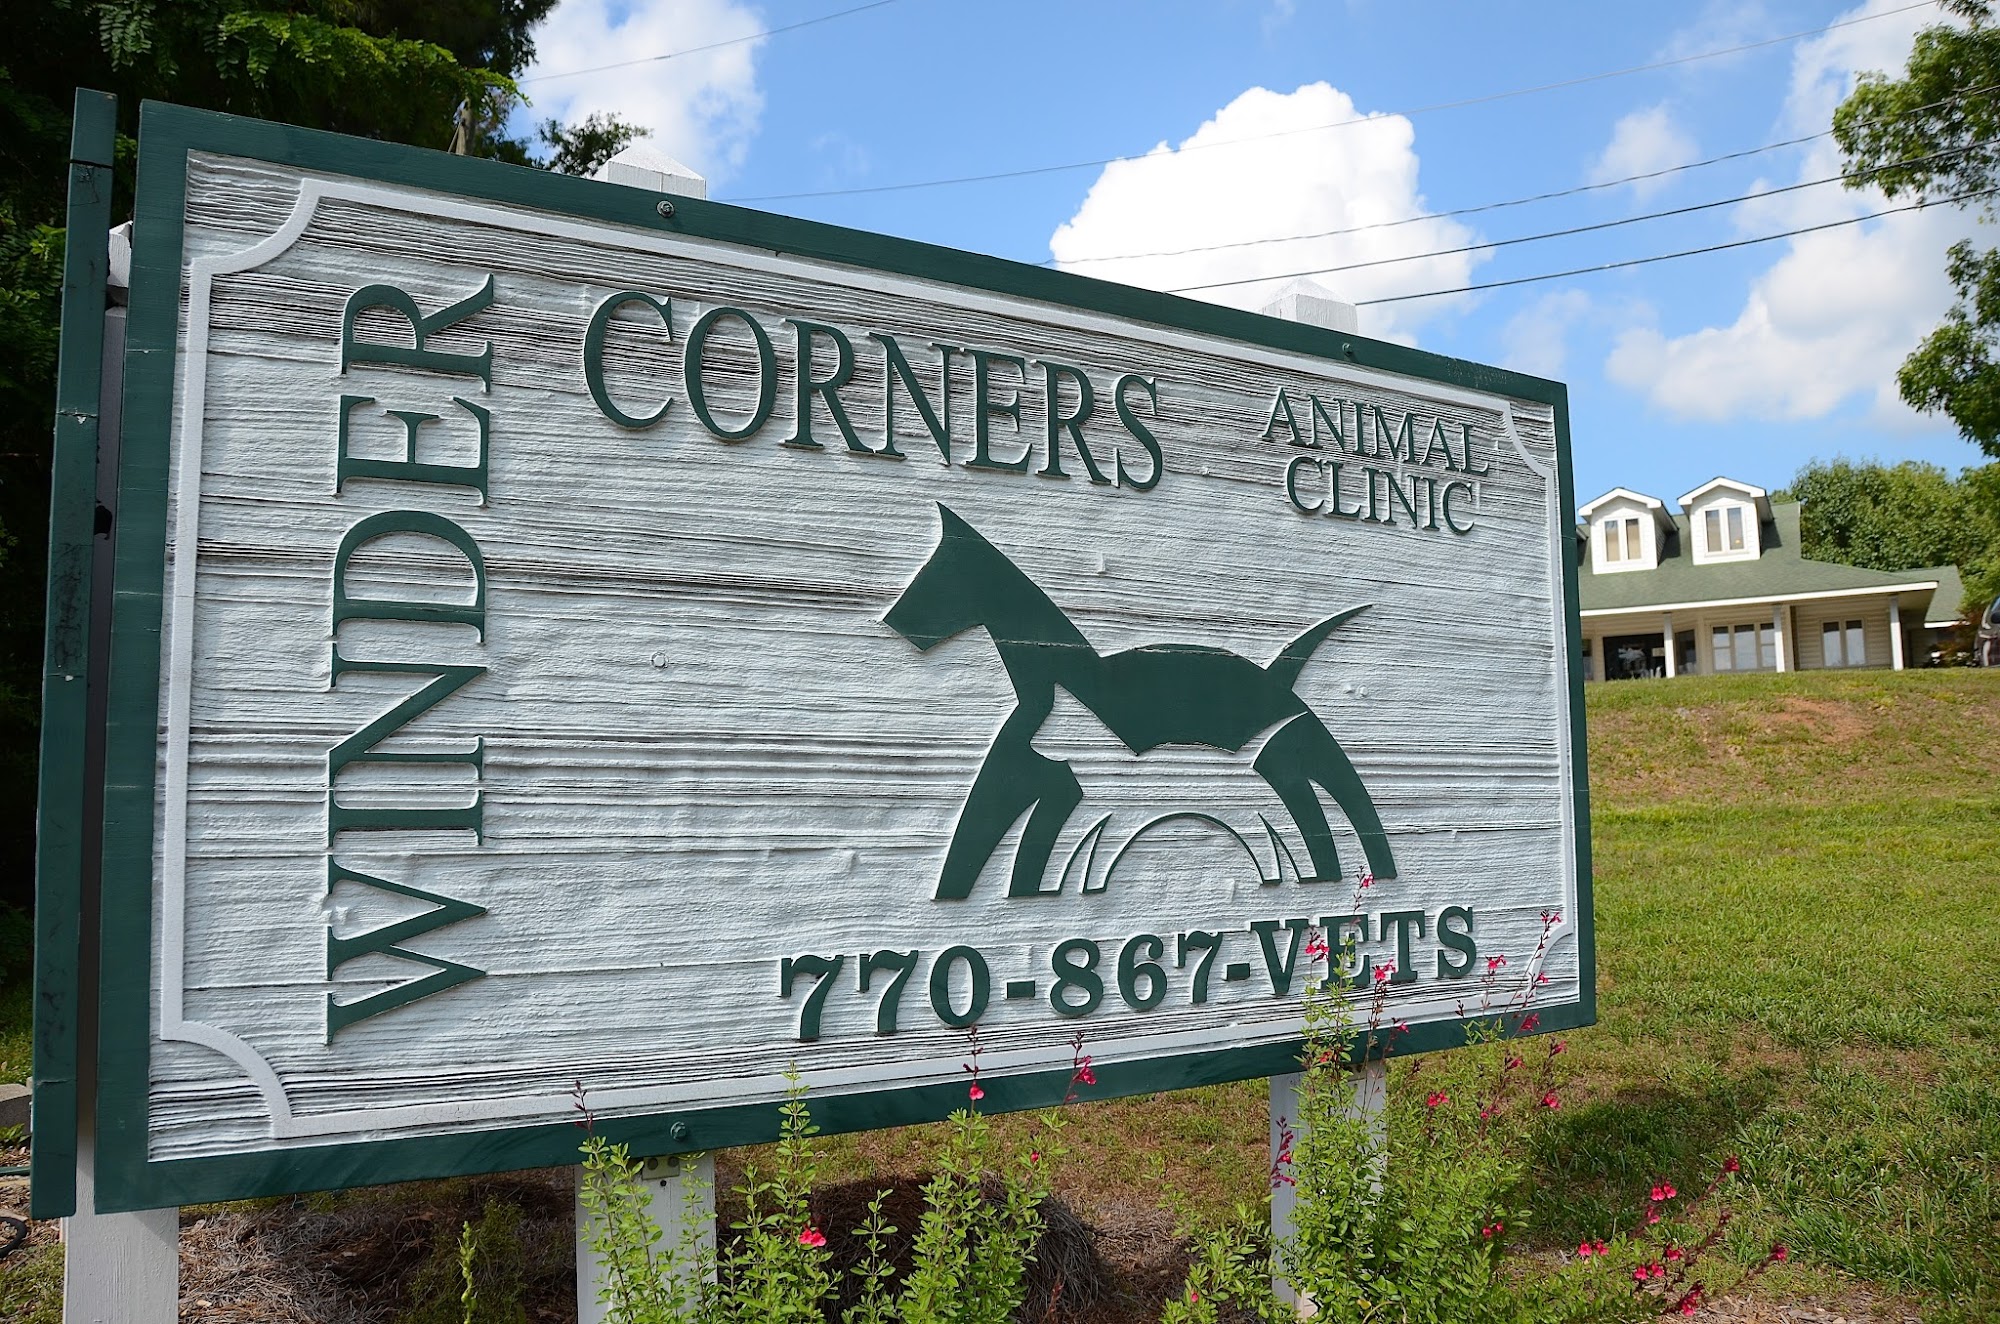 Winder Corners Animal Clinic